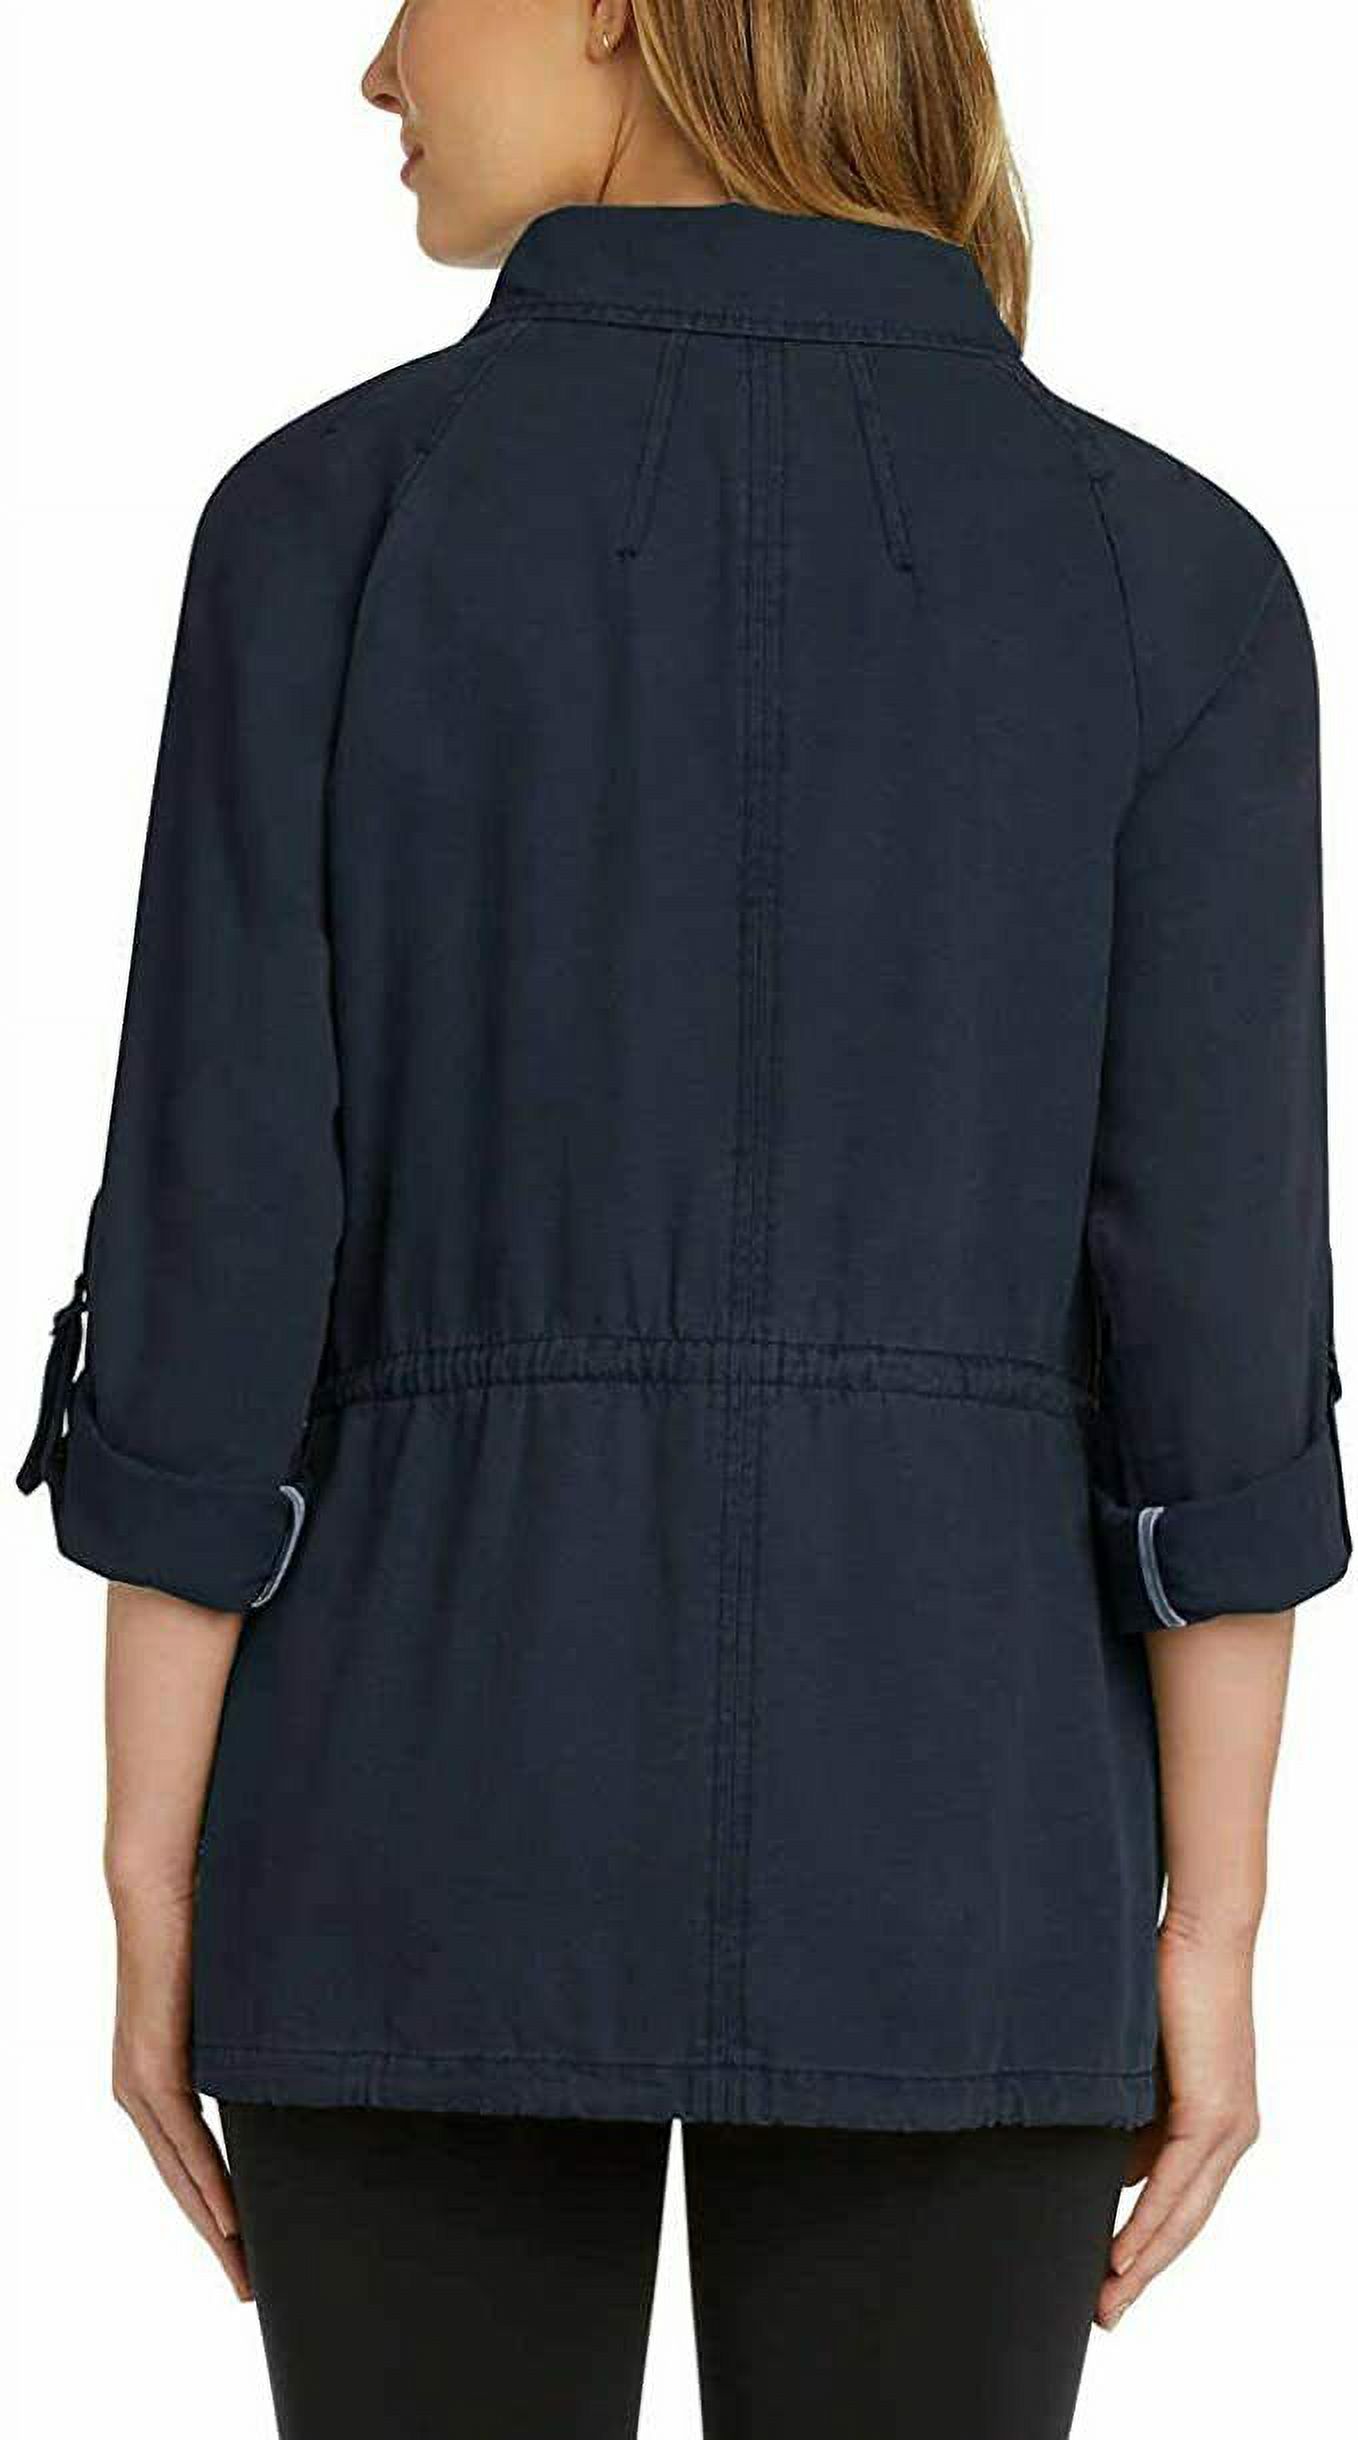 Matty M Ladies' Anorak Jacket (Navy, Medium) - image 2 of 3